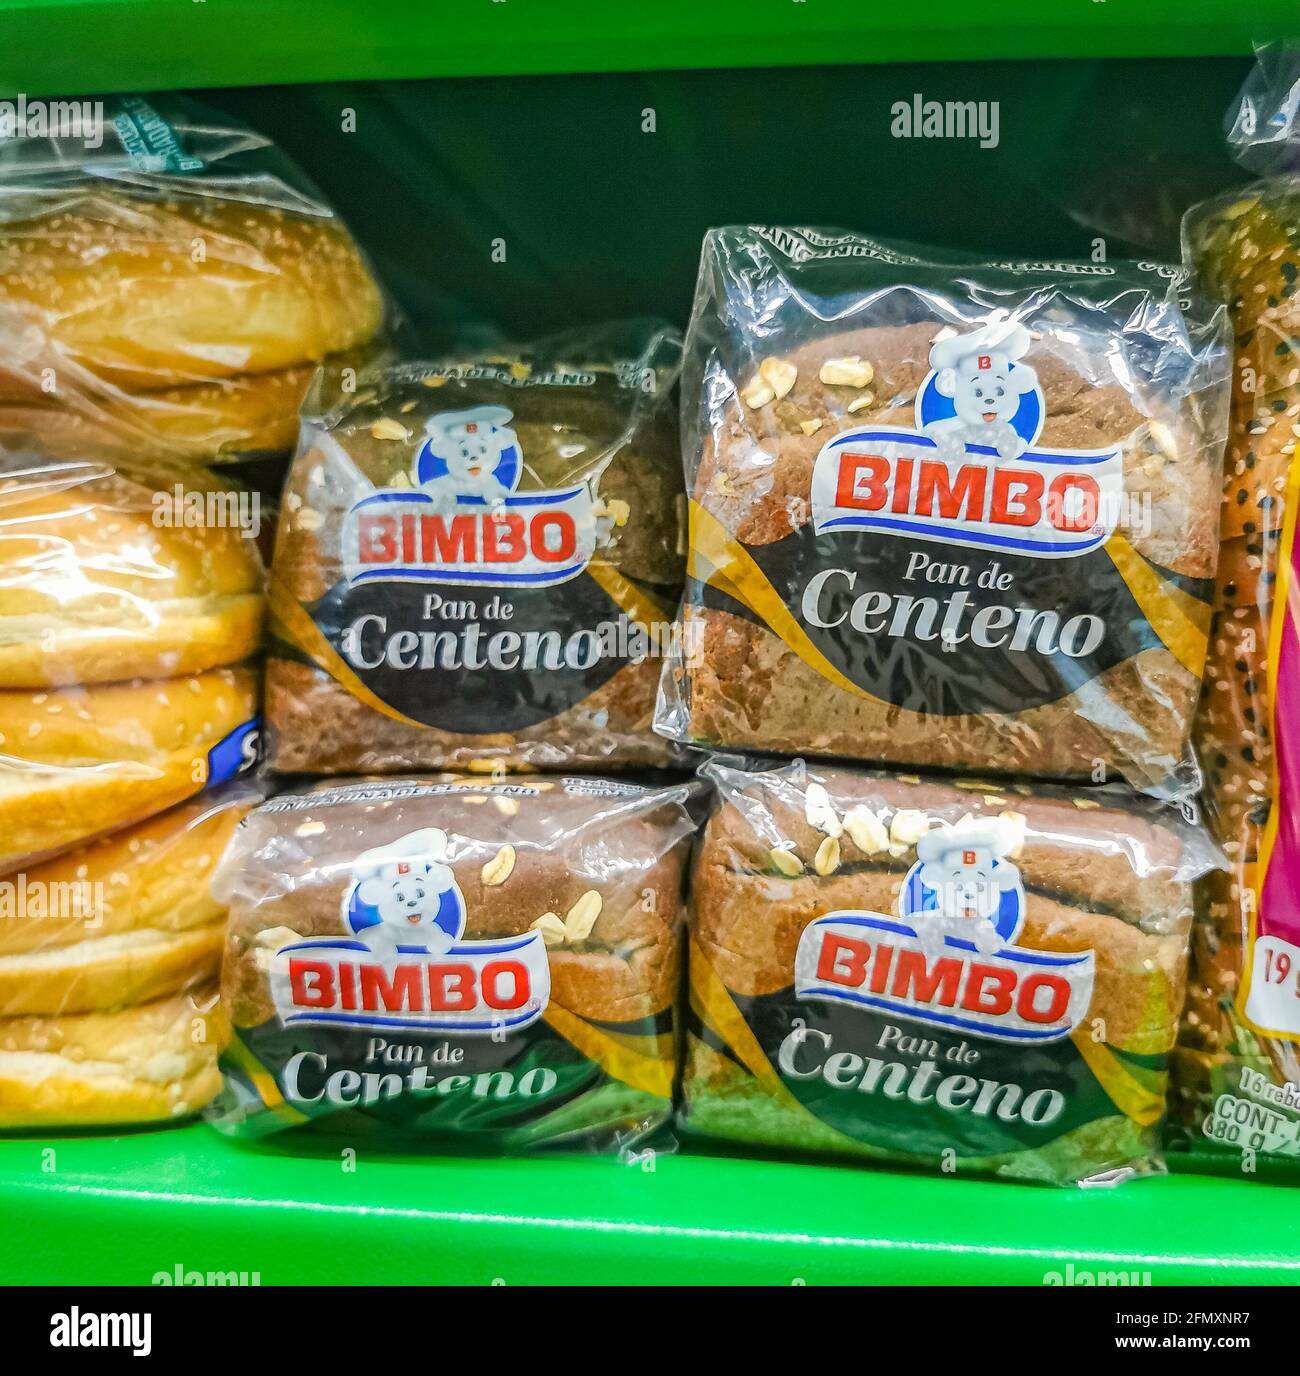 Playa del Carmen Mexico 23. April 2021 Bimbo toast rye bread Blanco Pan de Centeno packaging in the supermarket in Playa del Carmen Mexico. Stock Photo